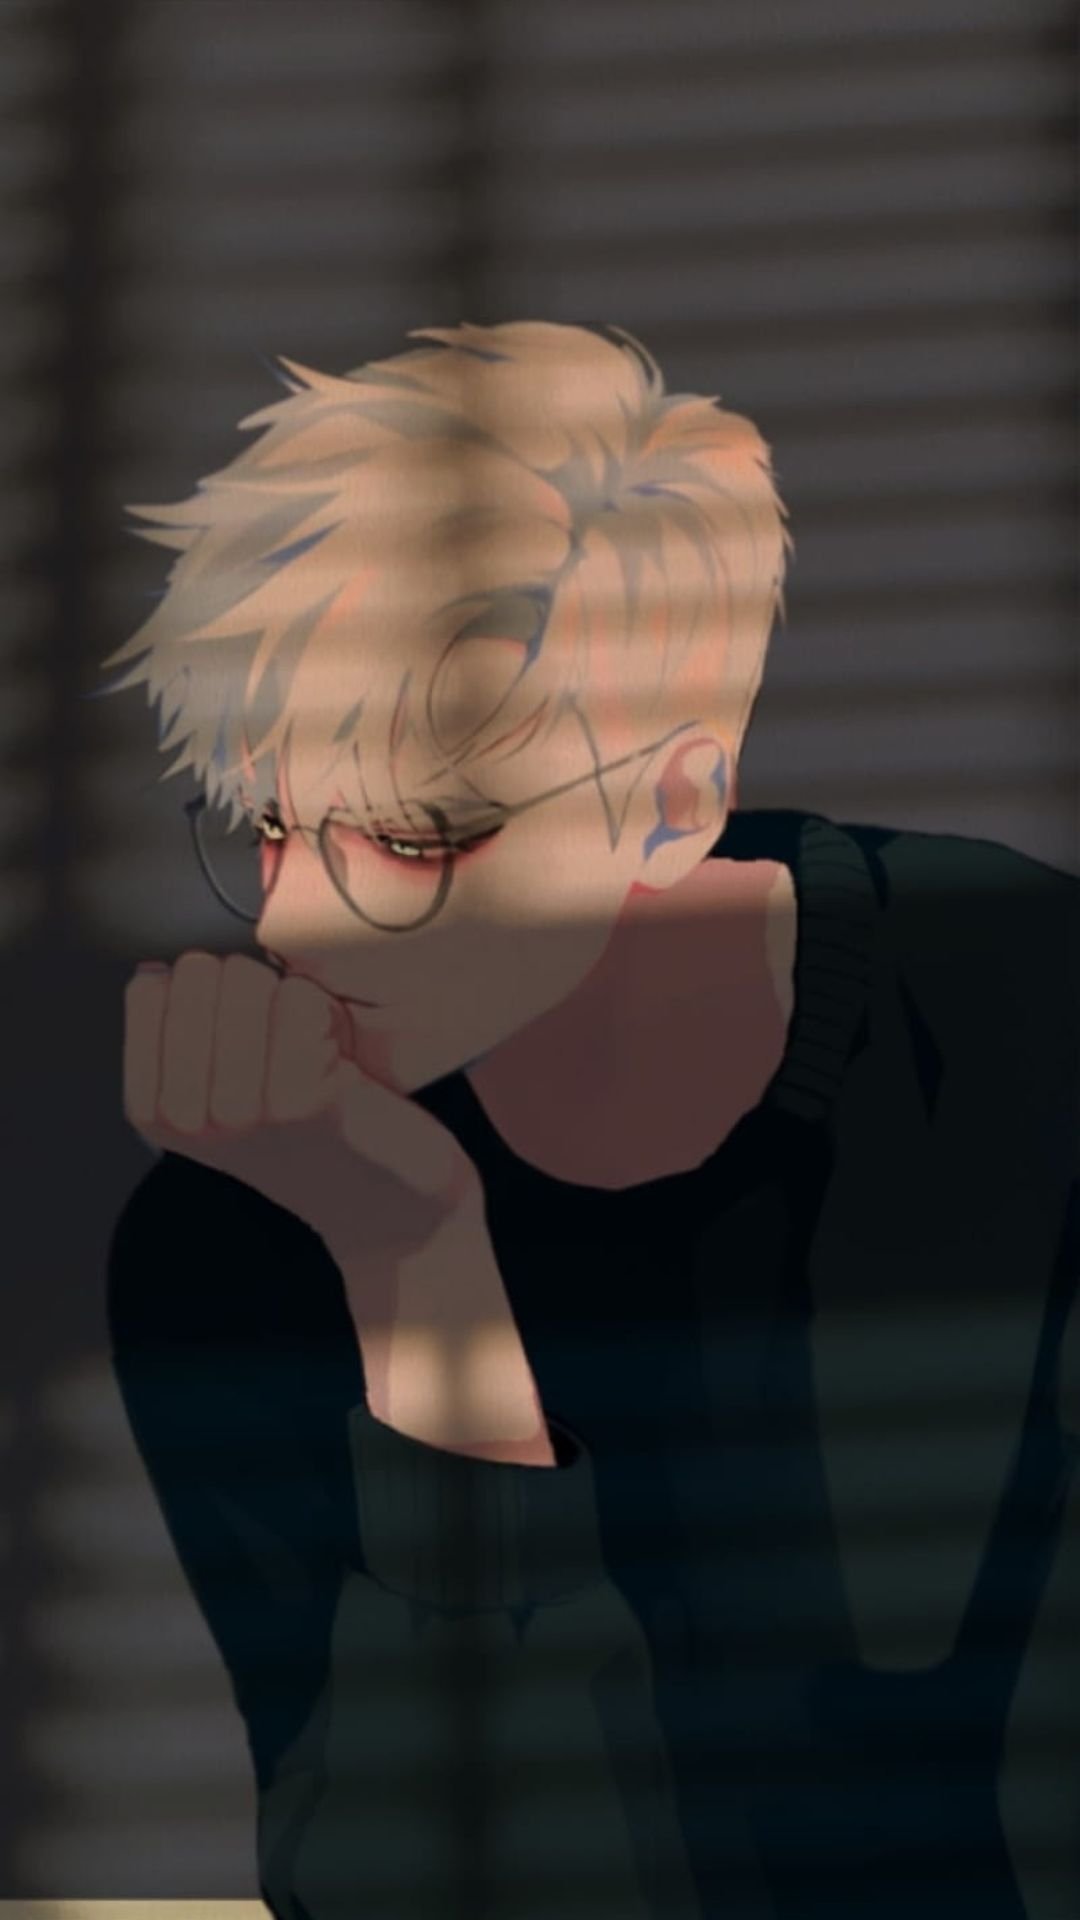 sad boy animation